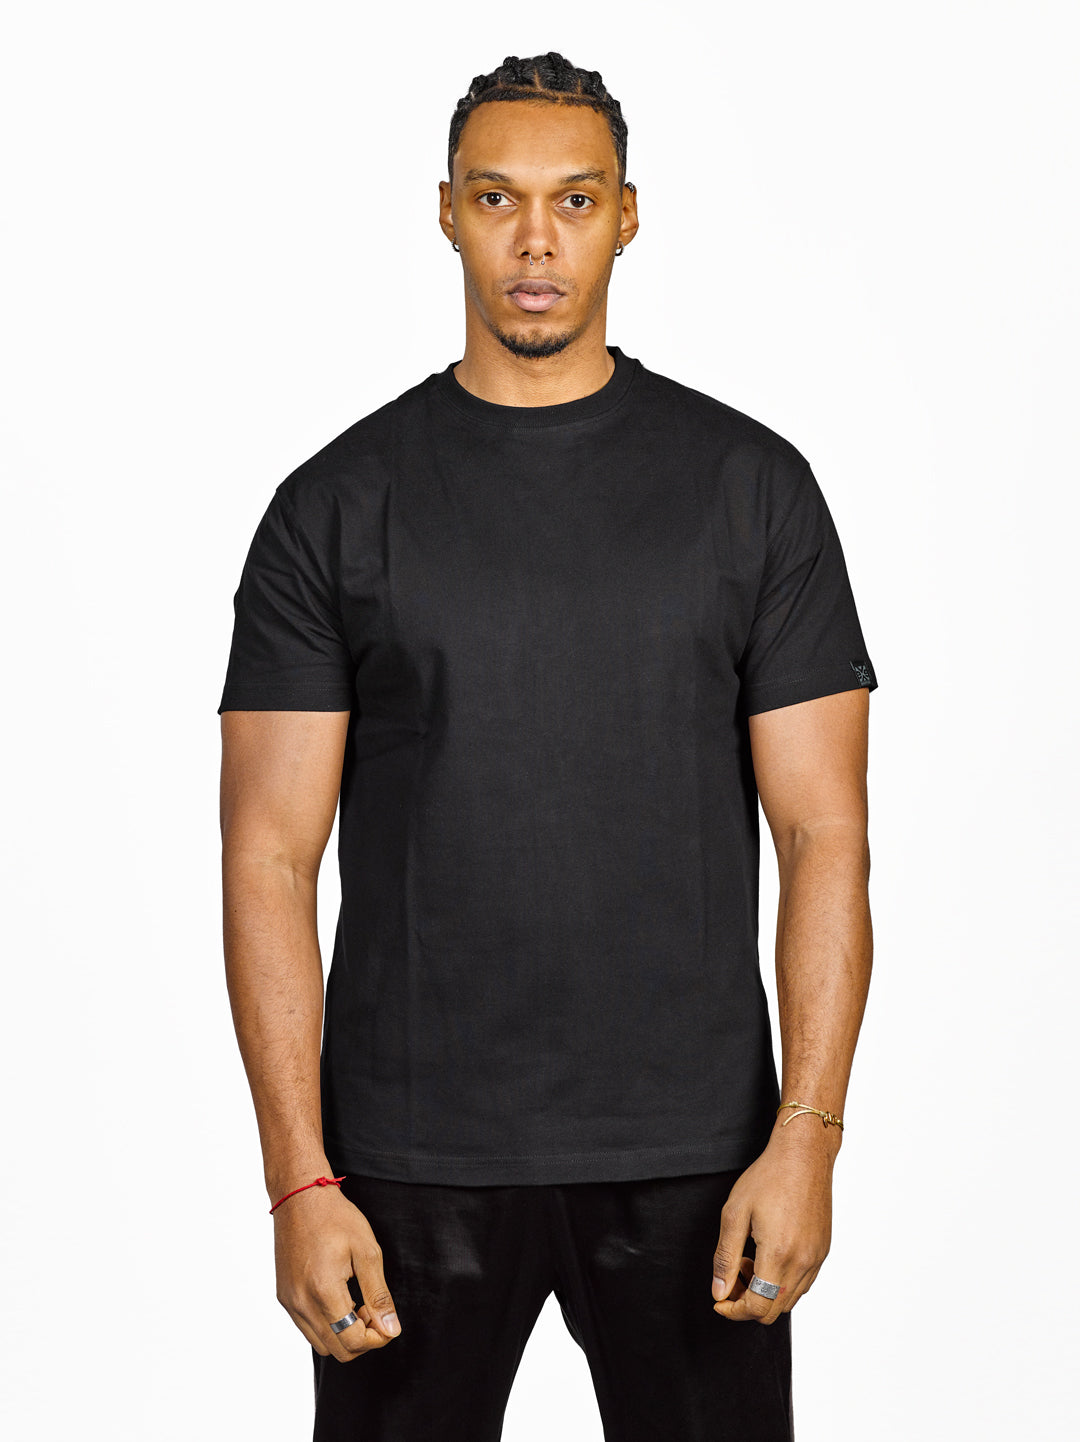 Exetees Regular Round Neck T-Shirt (Black) - exetees.com